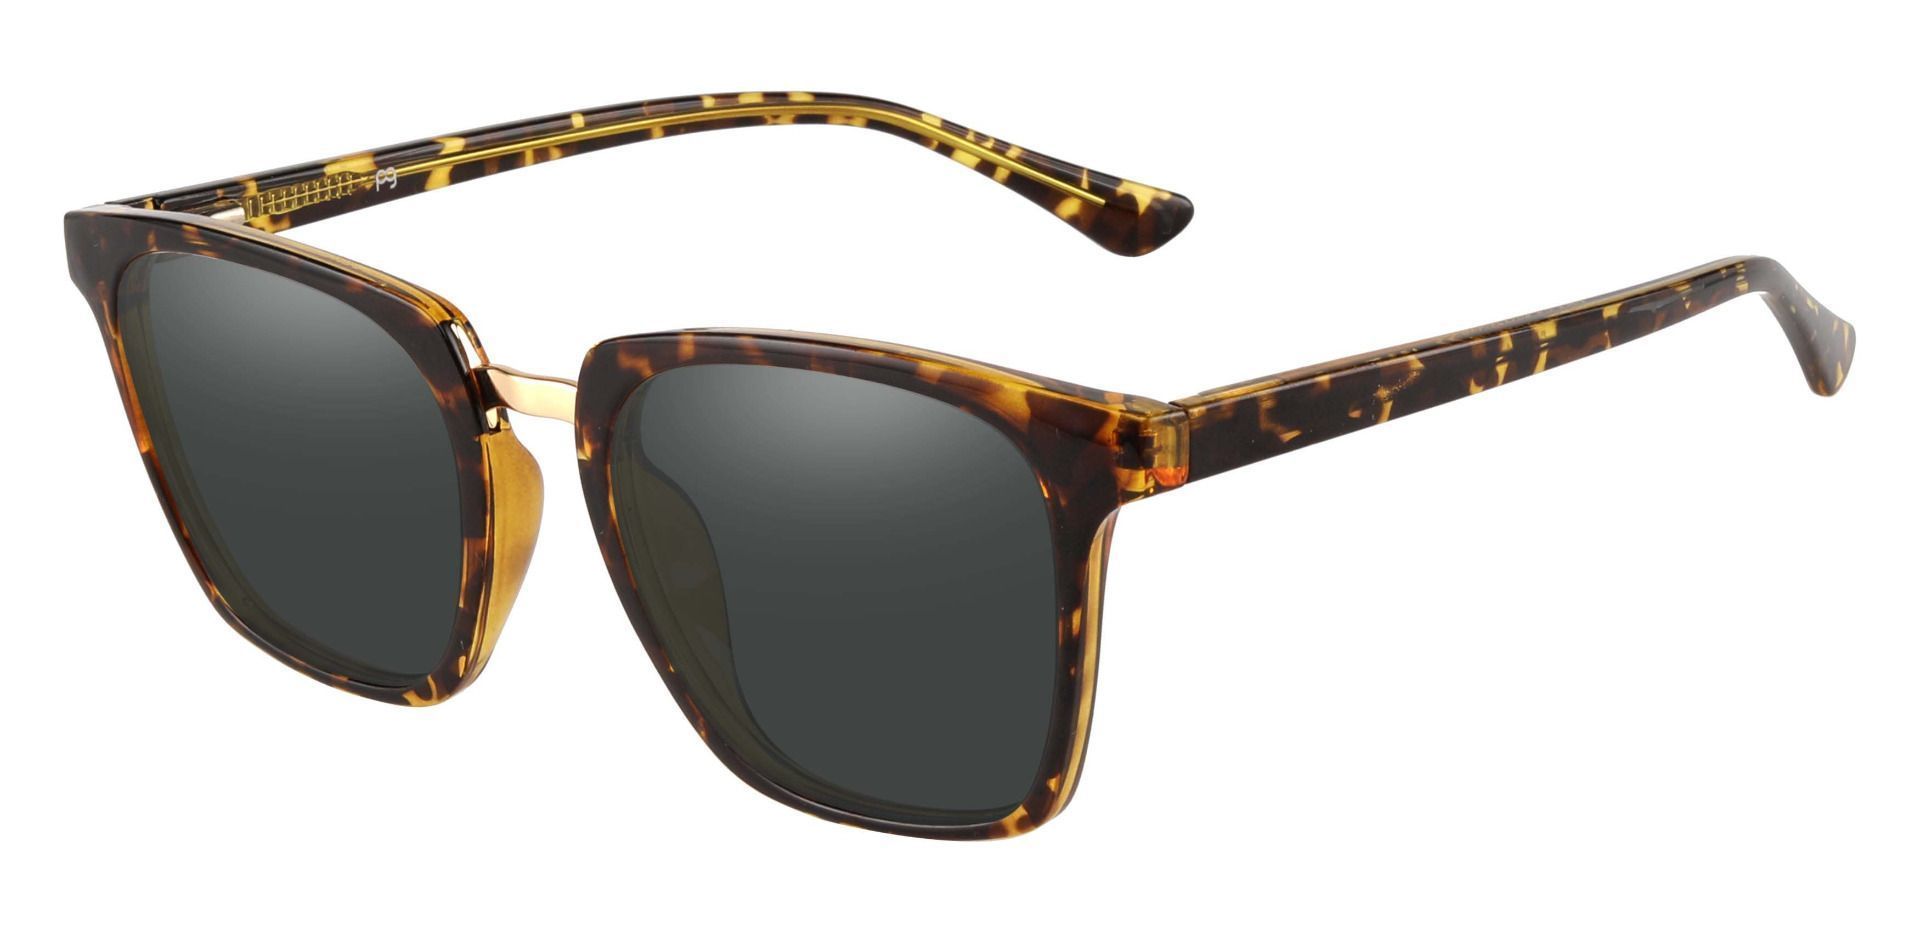 Delta Square Lined Bifocal Sunglasses - Tortoise Frame With Gray Lenses